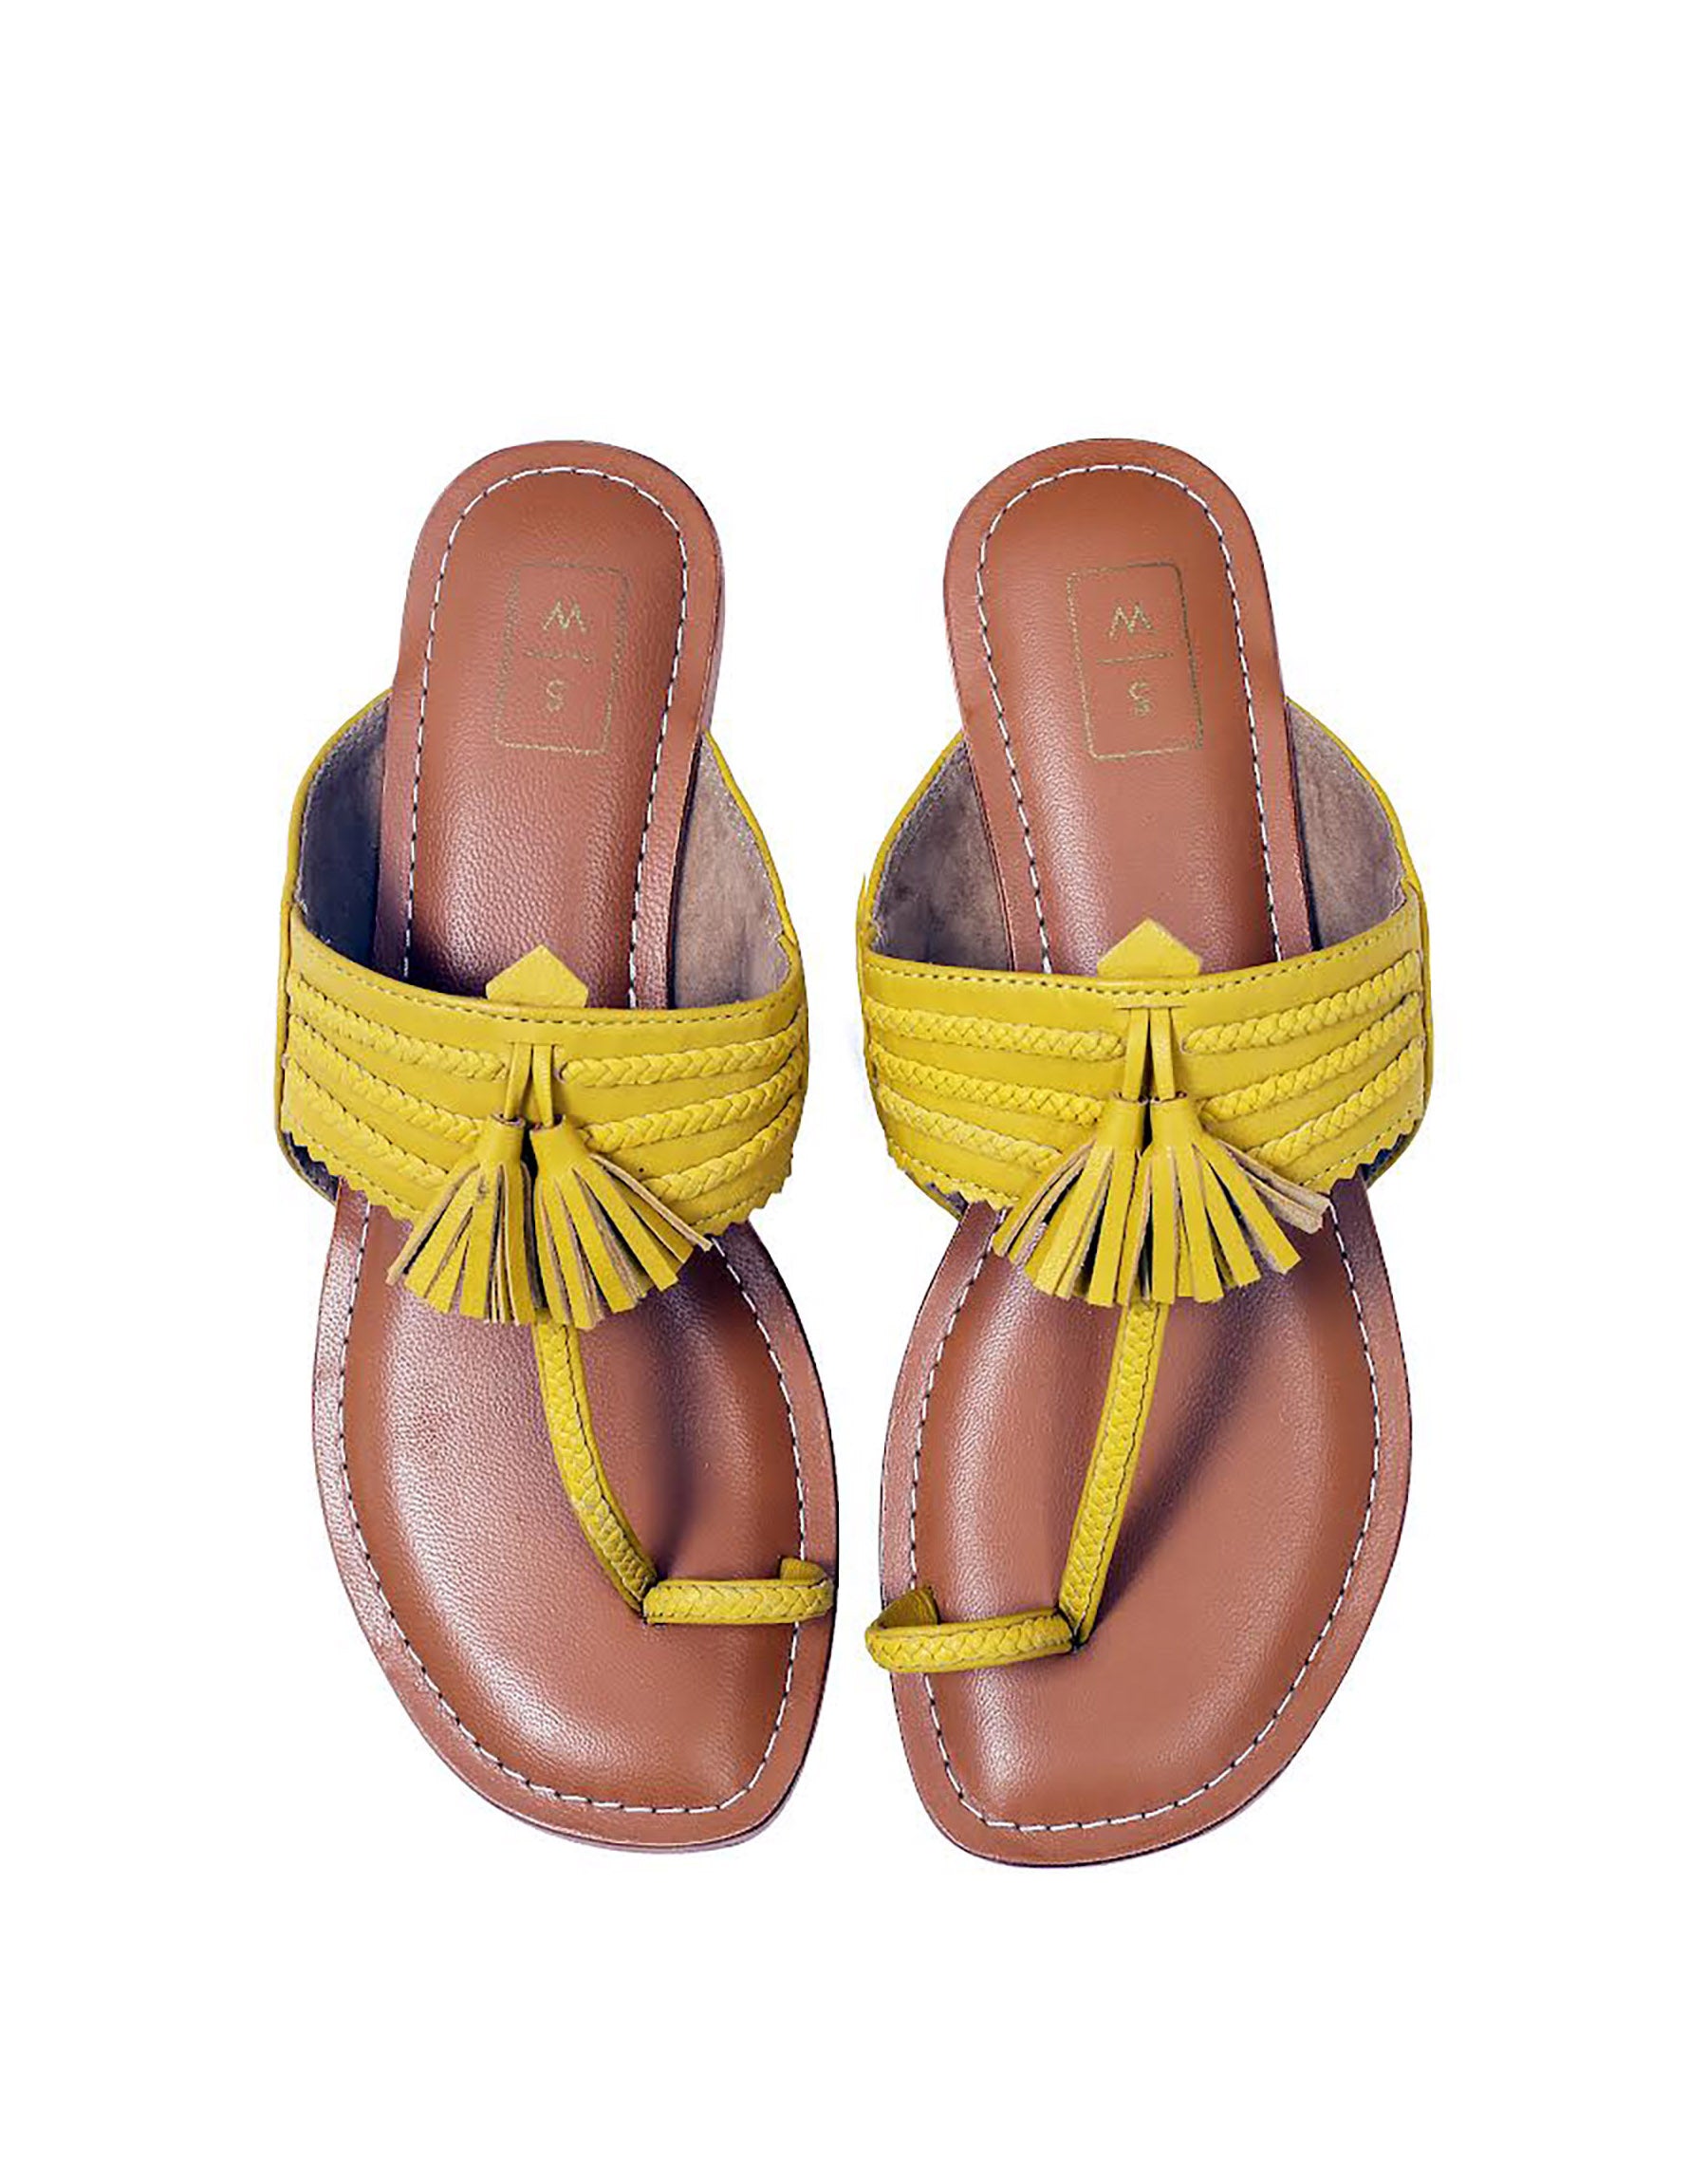 Haldi Mustard Yellow Kohlapuri Sandals